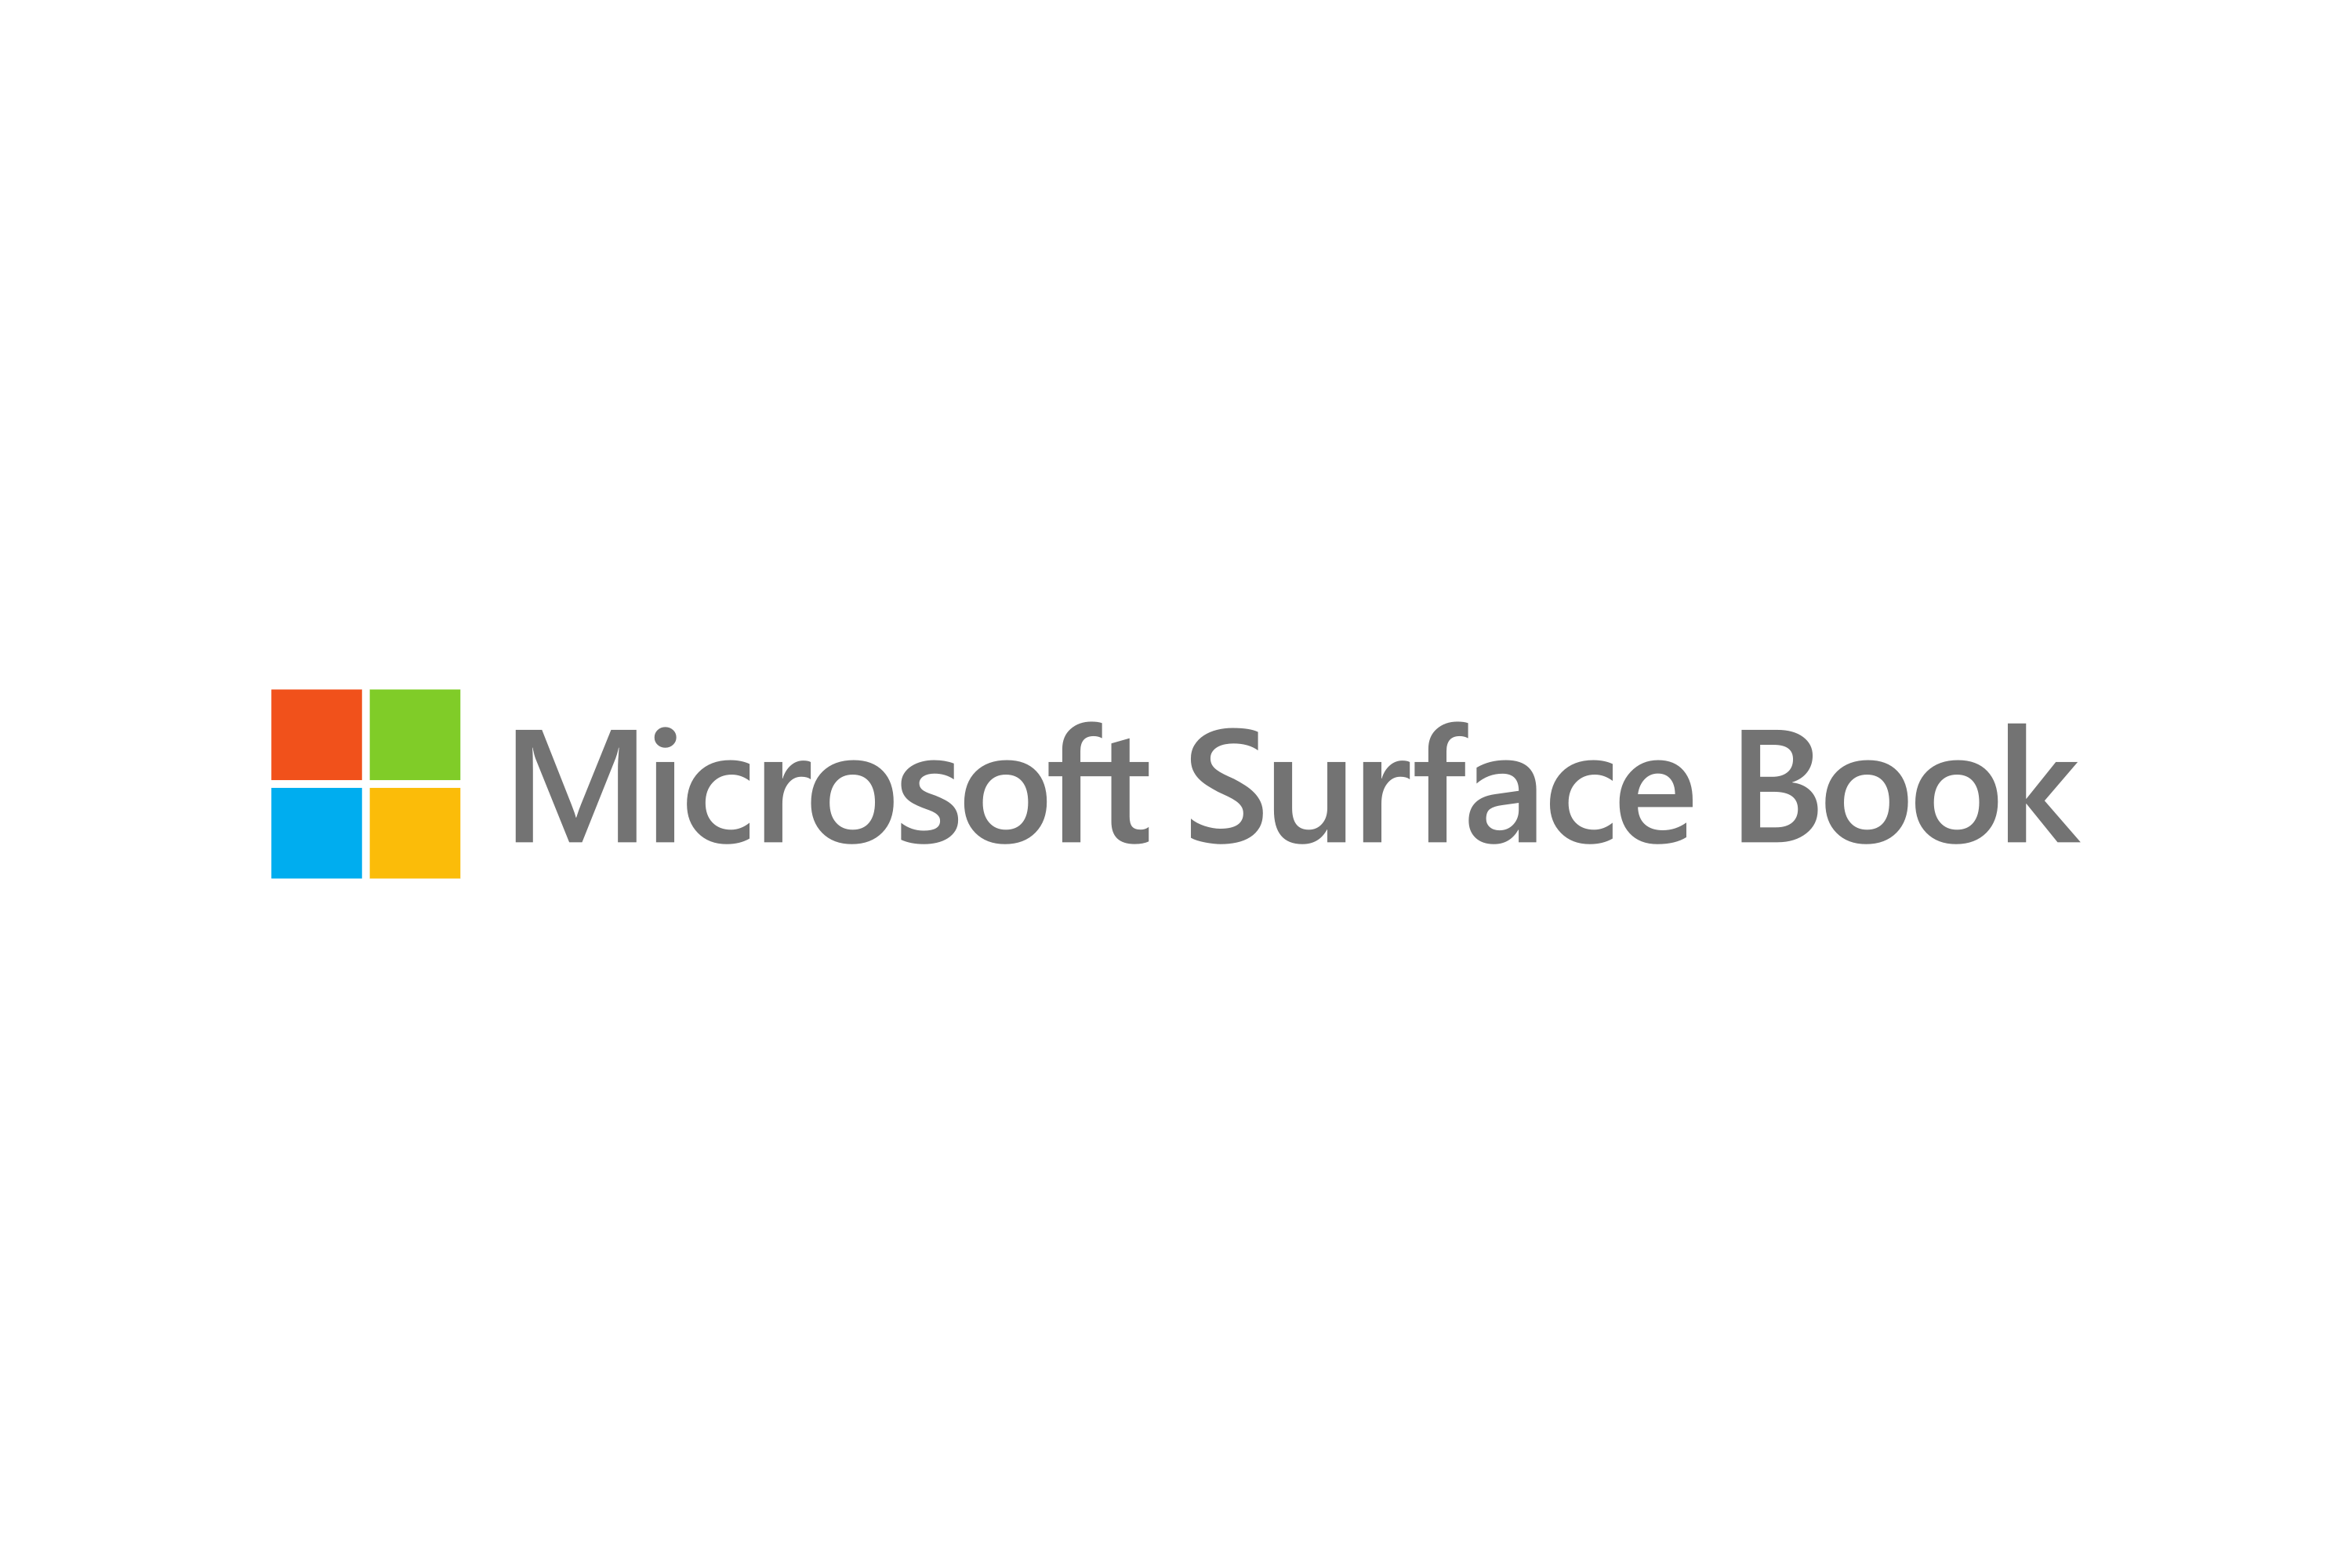 Download Surface Book 2 Logo in SVG Vector or PNG File Format - Logo.wine